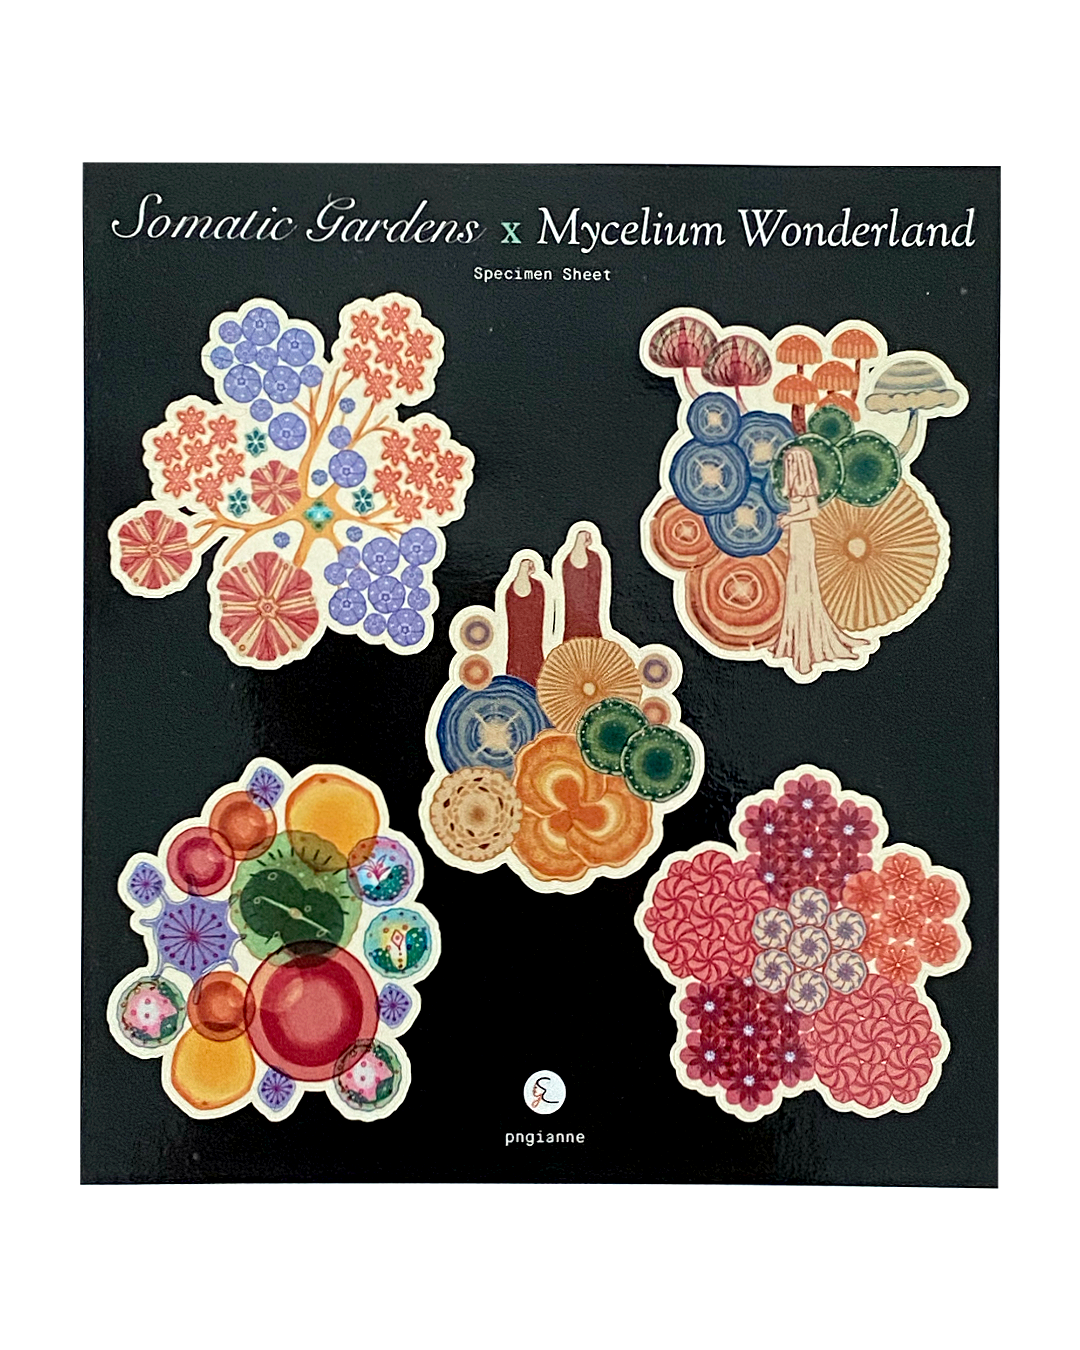 Somatic Gardens x Mycelium Wonderland Specimen Sheet